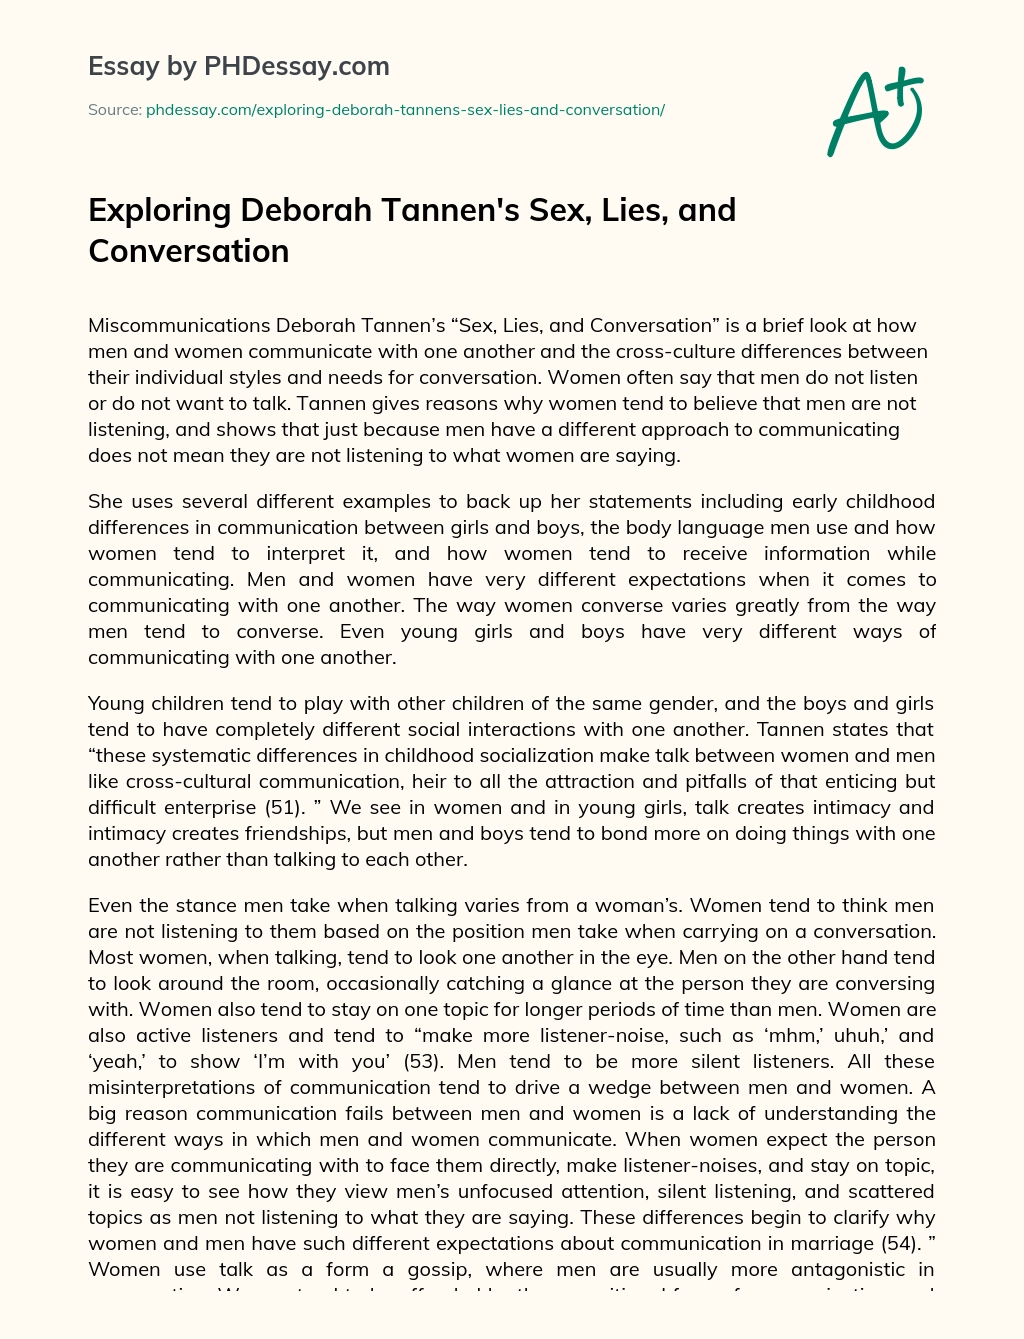 Exploring Deborah Tannen’s Sex, Lies, and Conversation essay